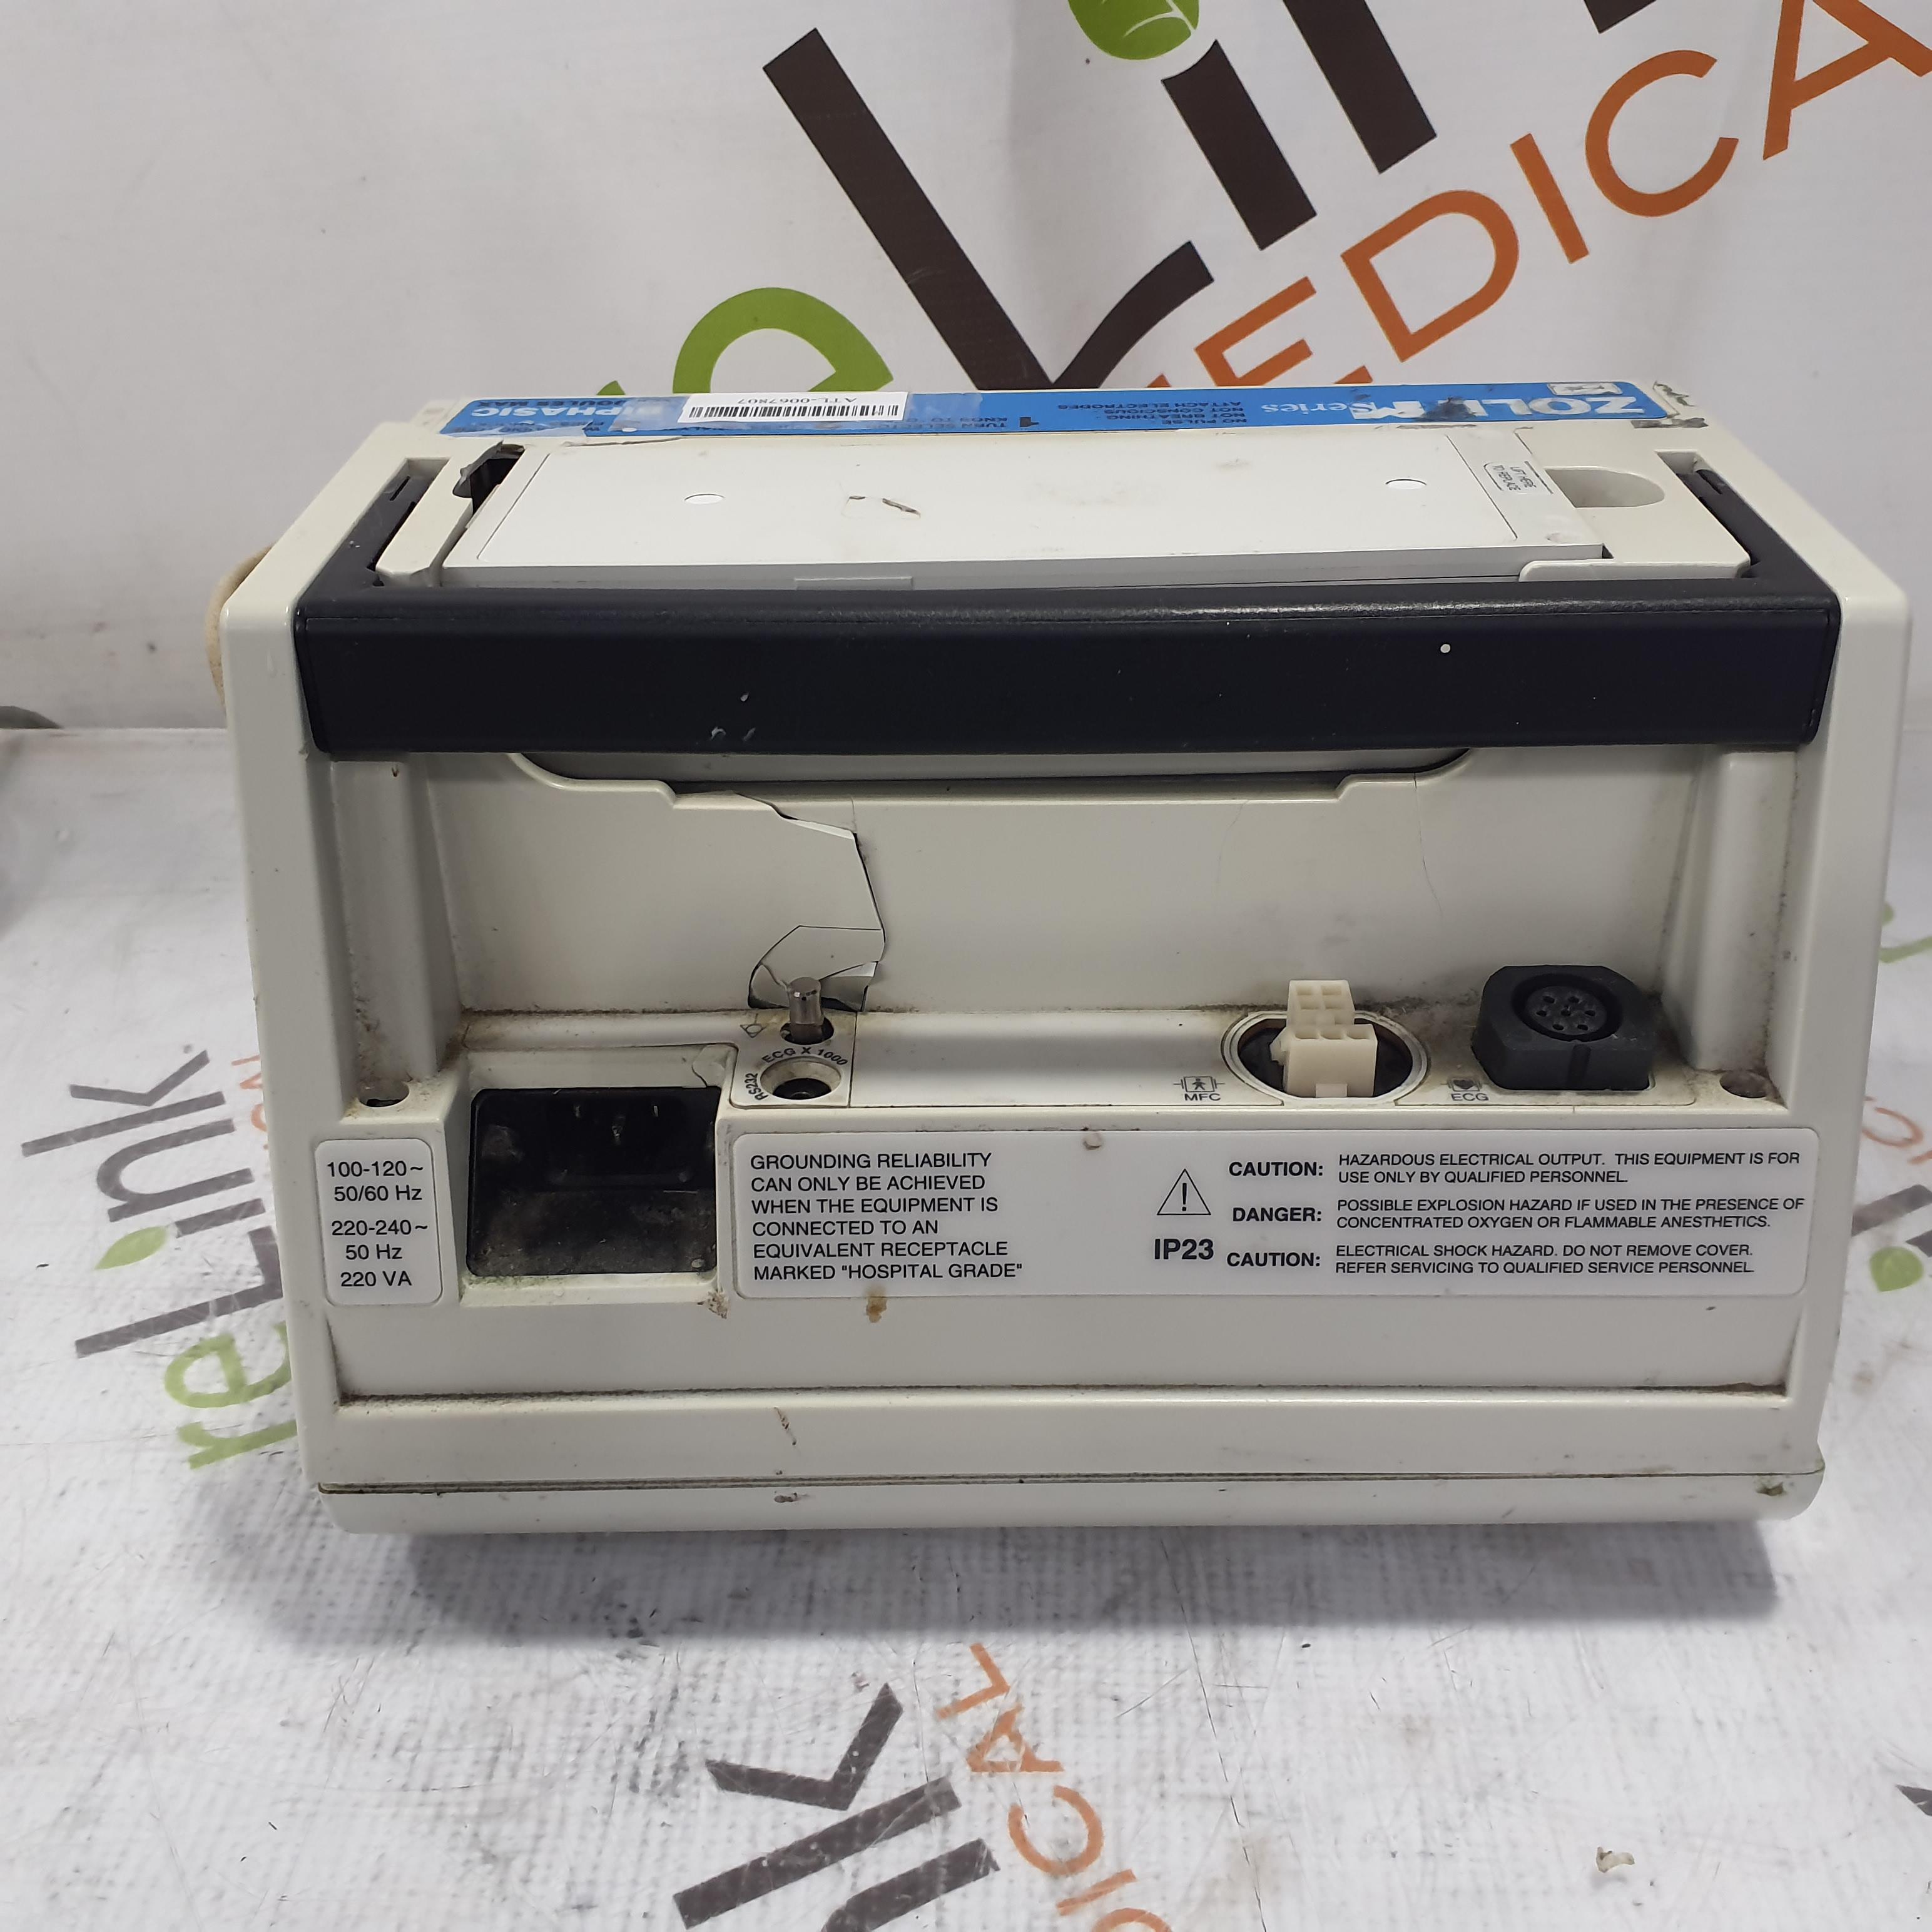 Zoll M Series Defibrillator - 377711